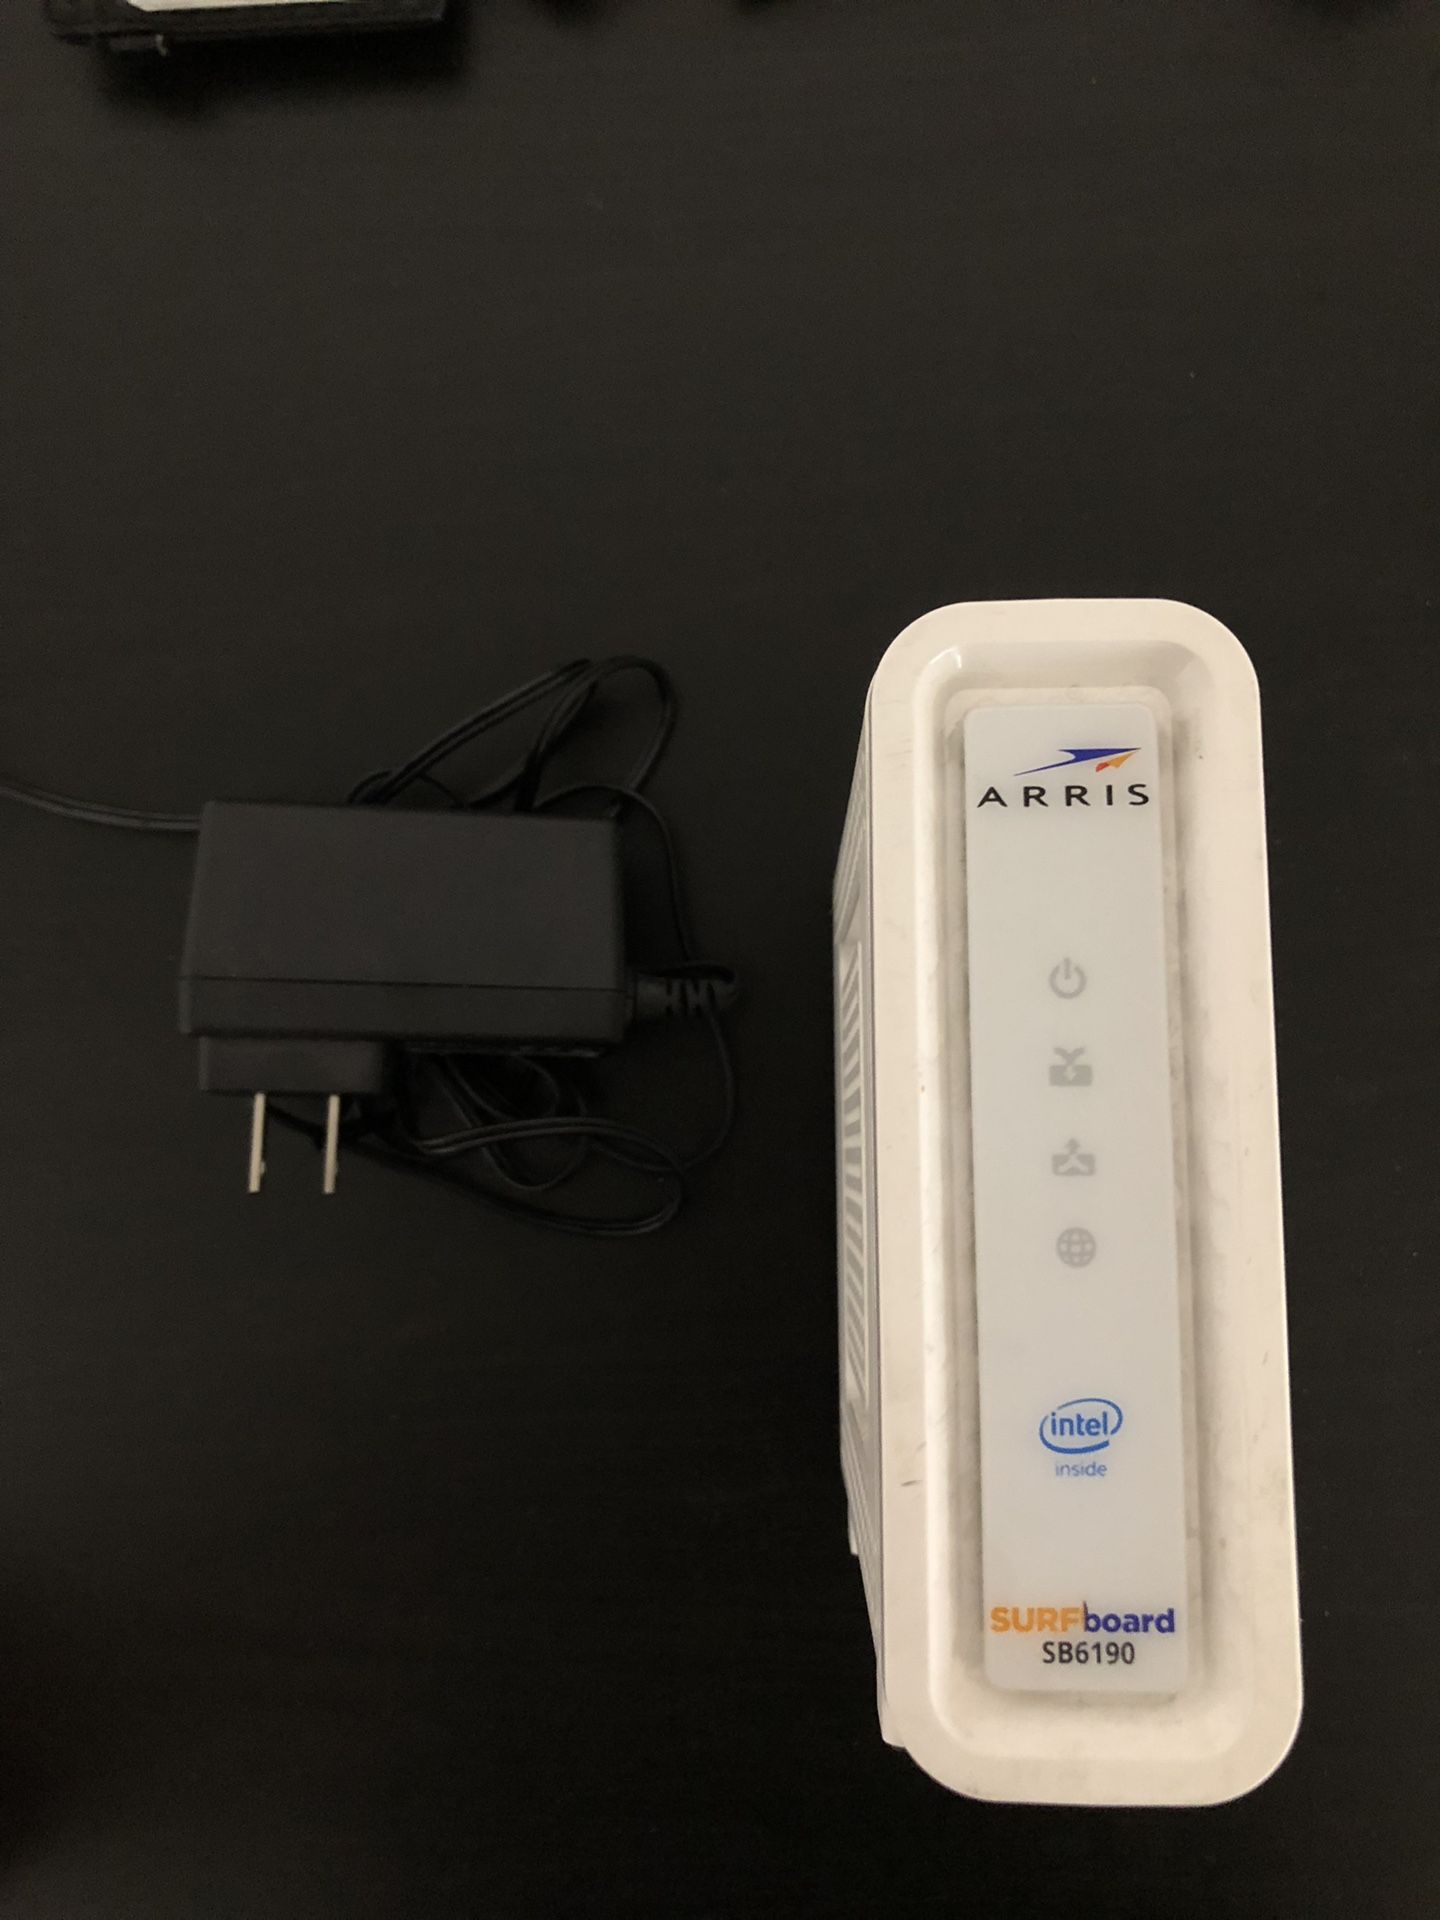 Cable modem Arris surfboard SB6190